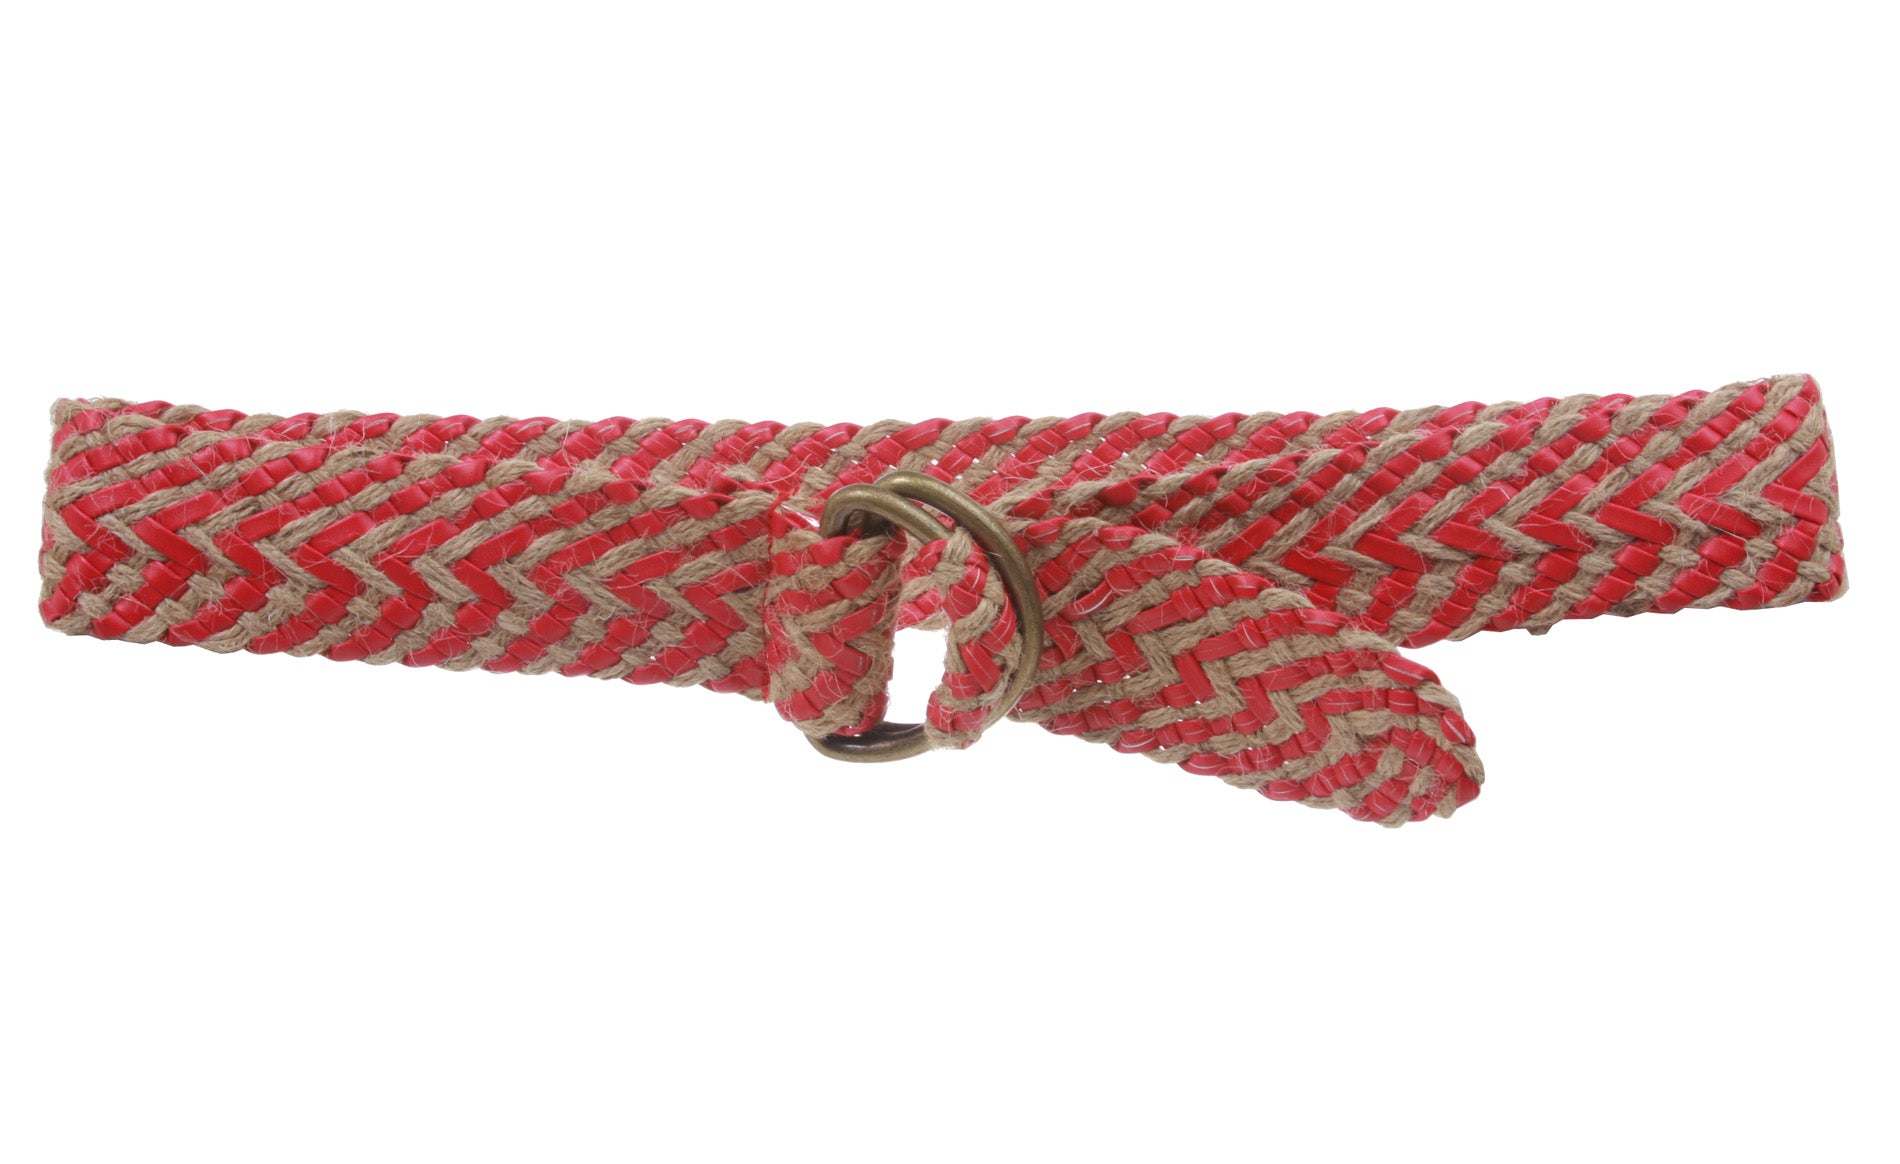 2" (50 mm) Wide D Ring Jute Braided Fashion Woven Sash Belt